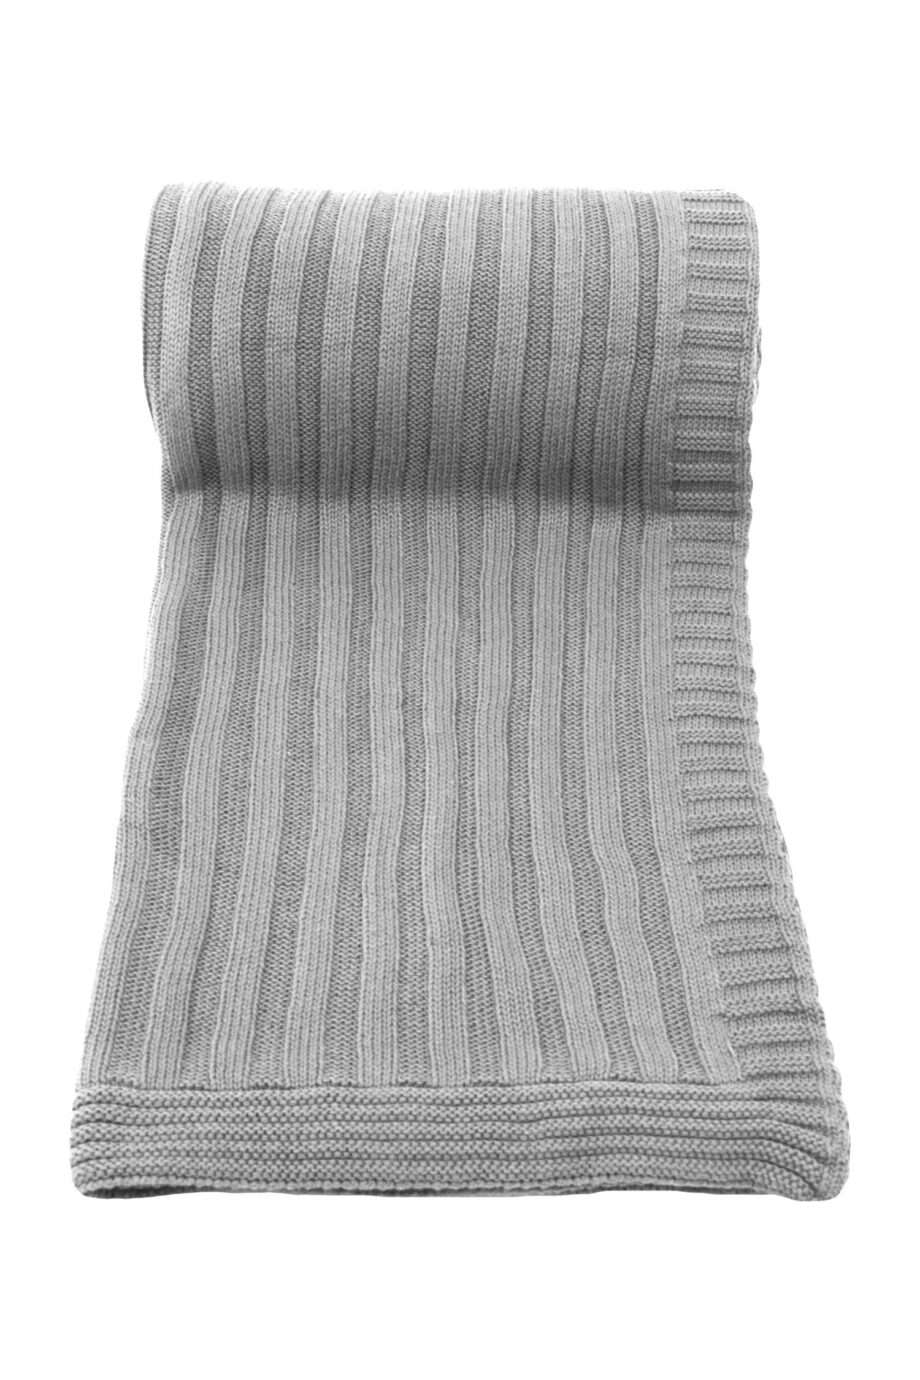 ribs light grey knitted cotton plaid medium